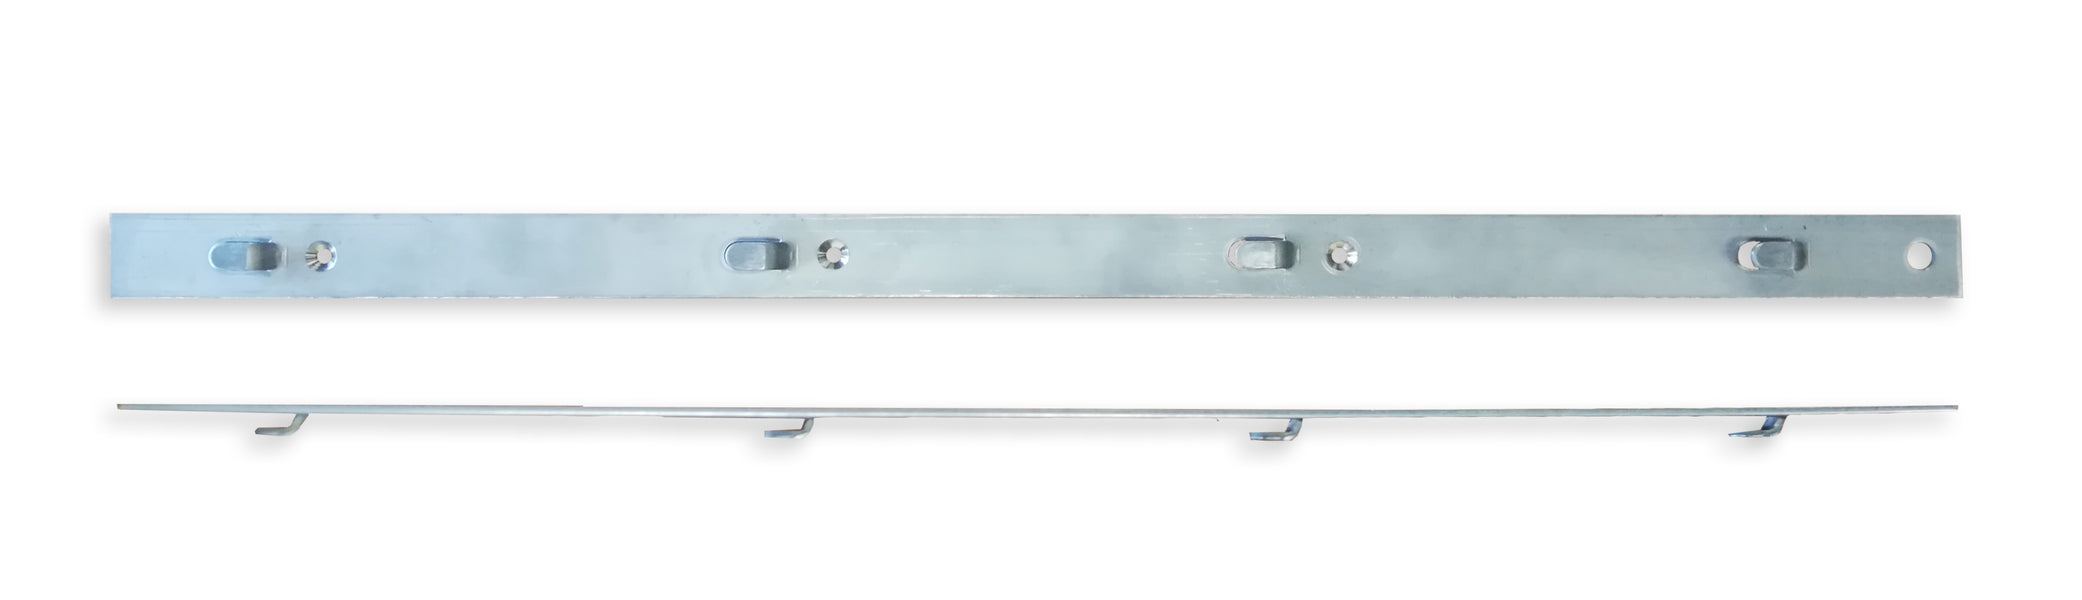 Stainless Steel Suspension Bracket for Wind Hood TPI 950